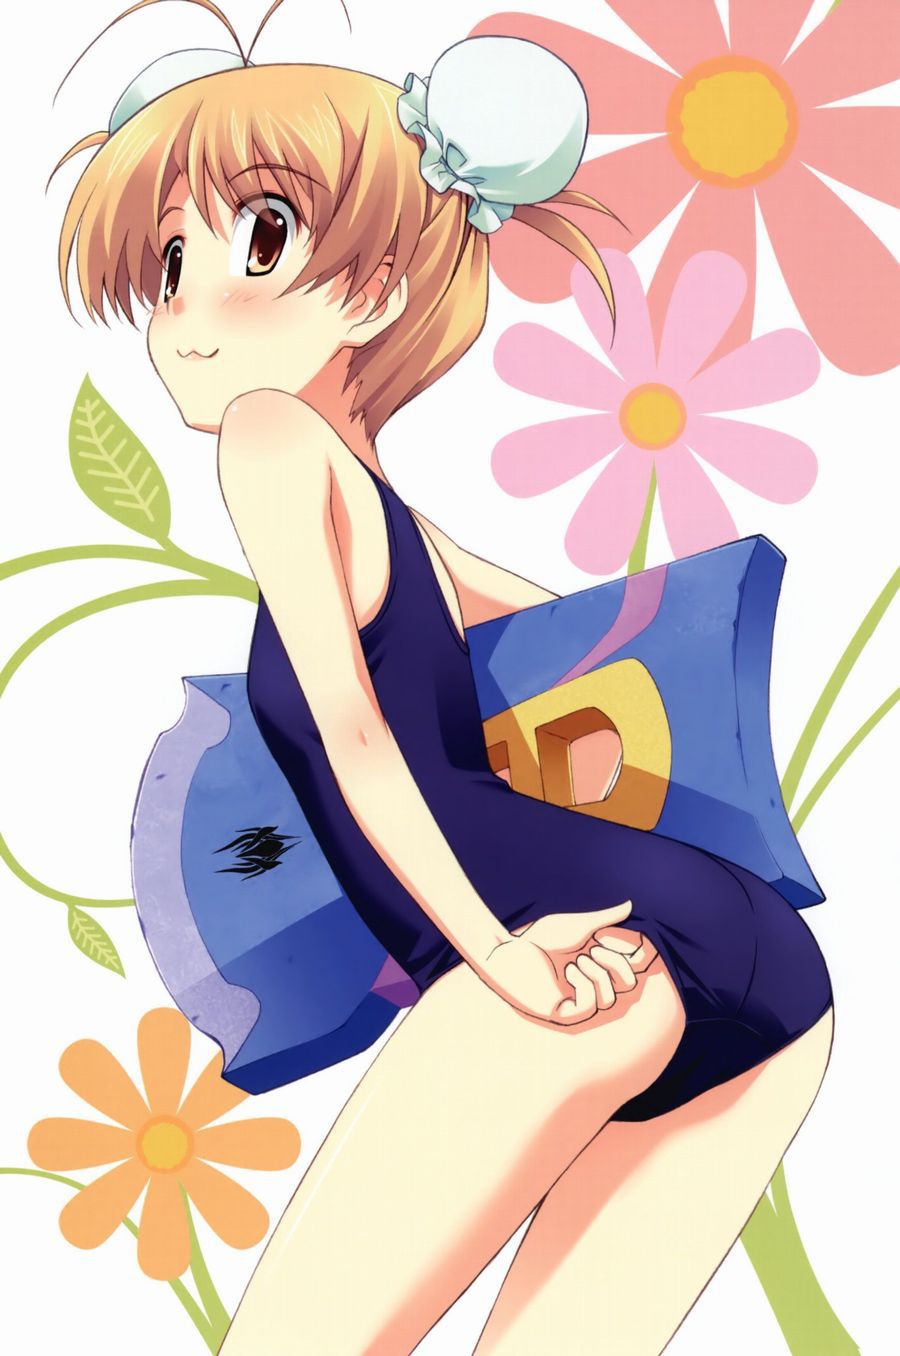 [Image] illustrations of wwwww loli manga anime characters too cute, MoE! 36